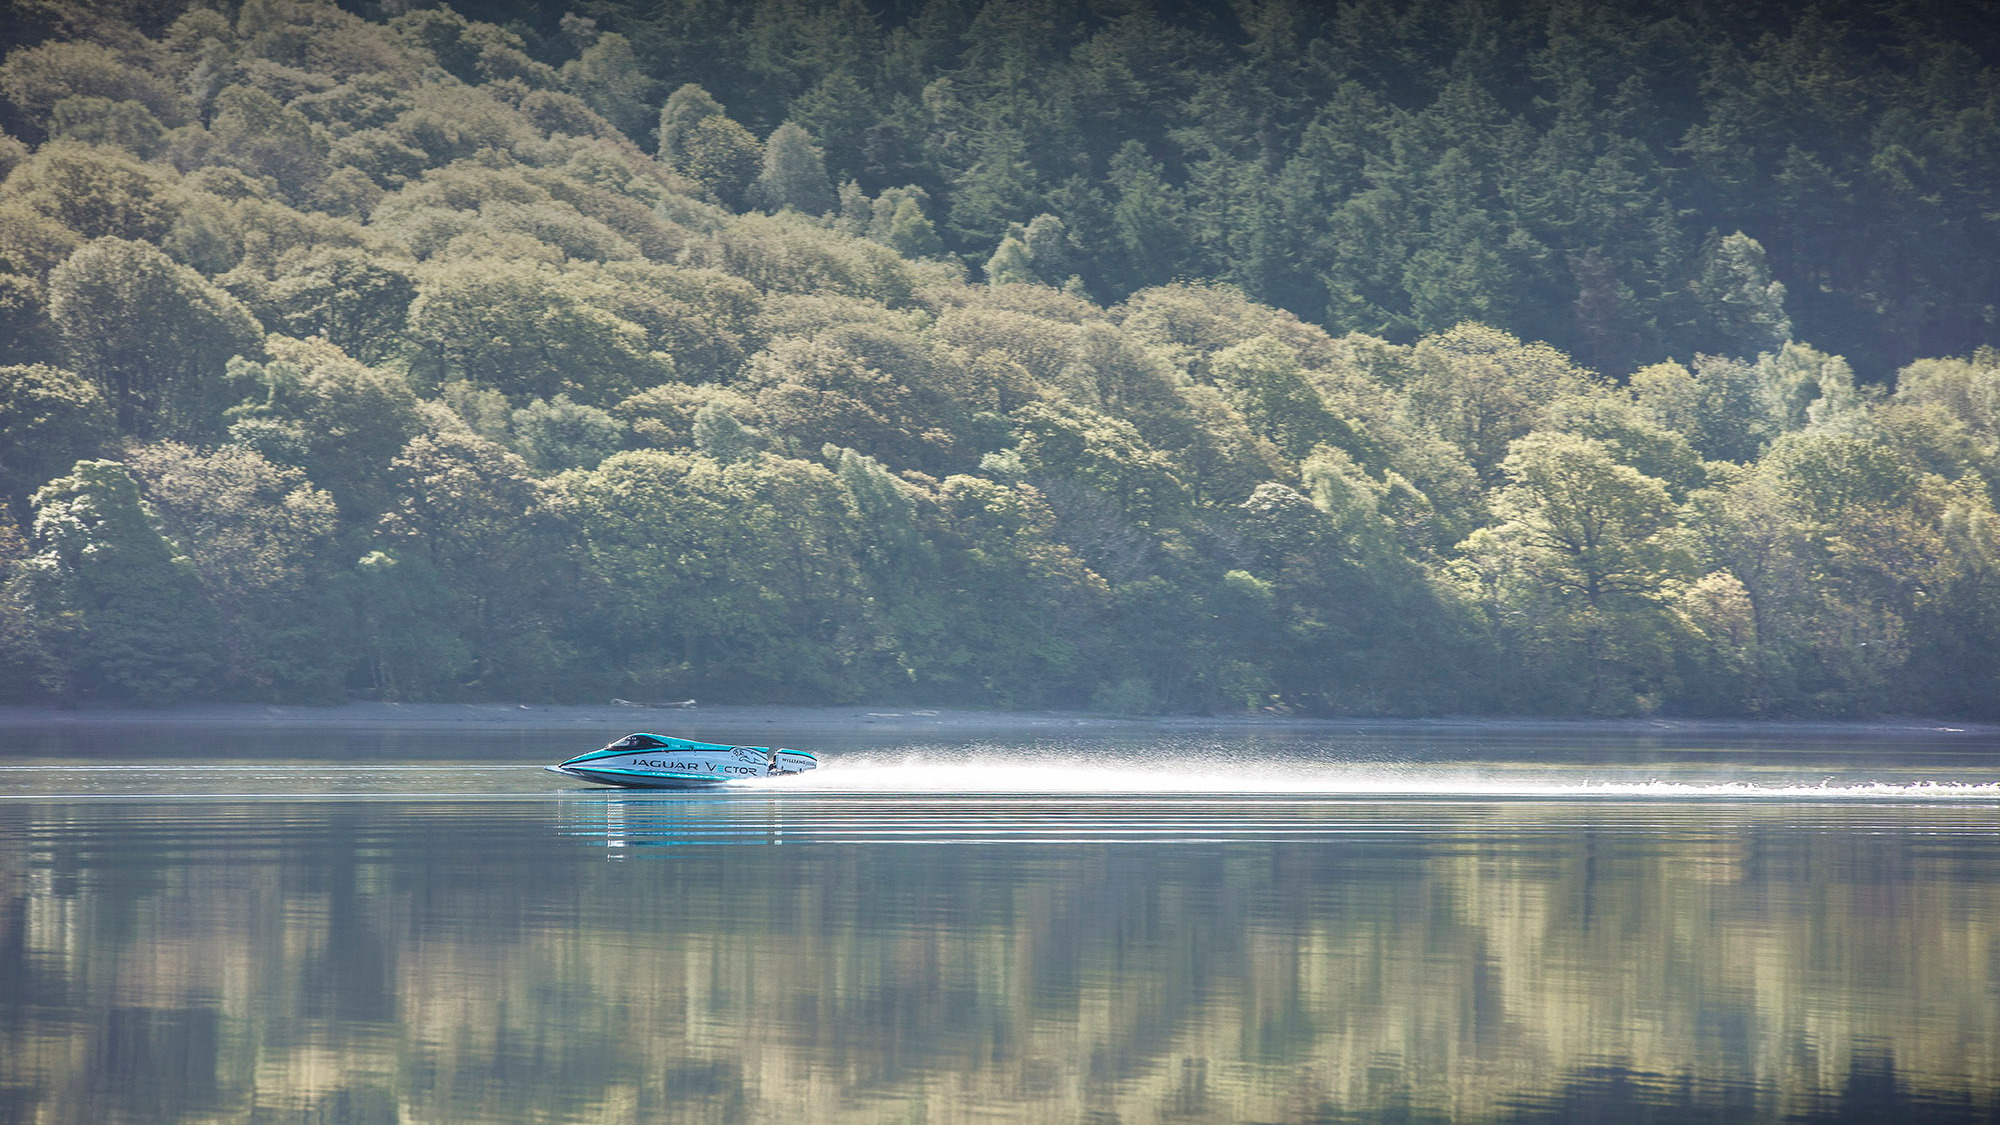 Jaguar Vector Racing break marine electric speed record